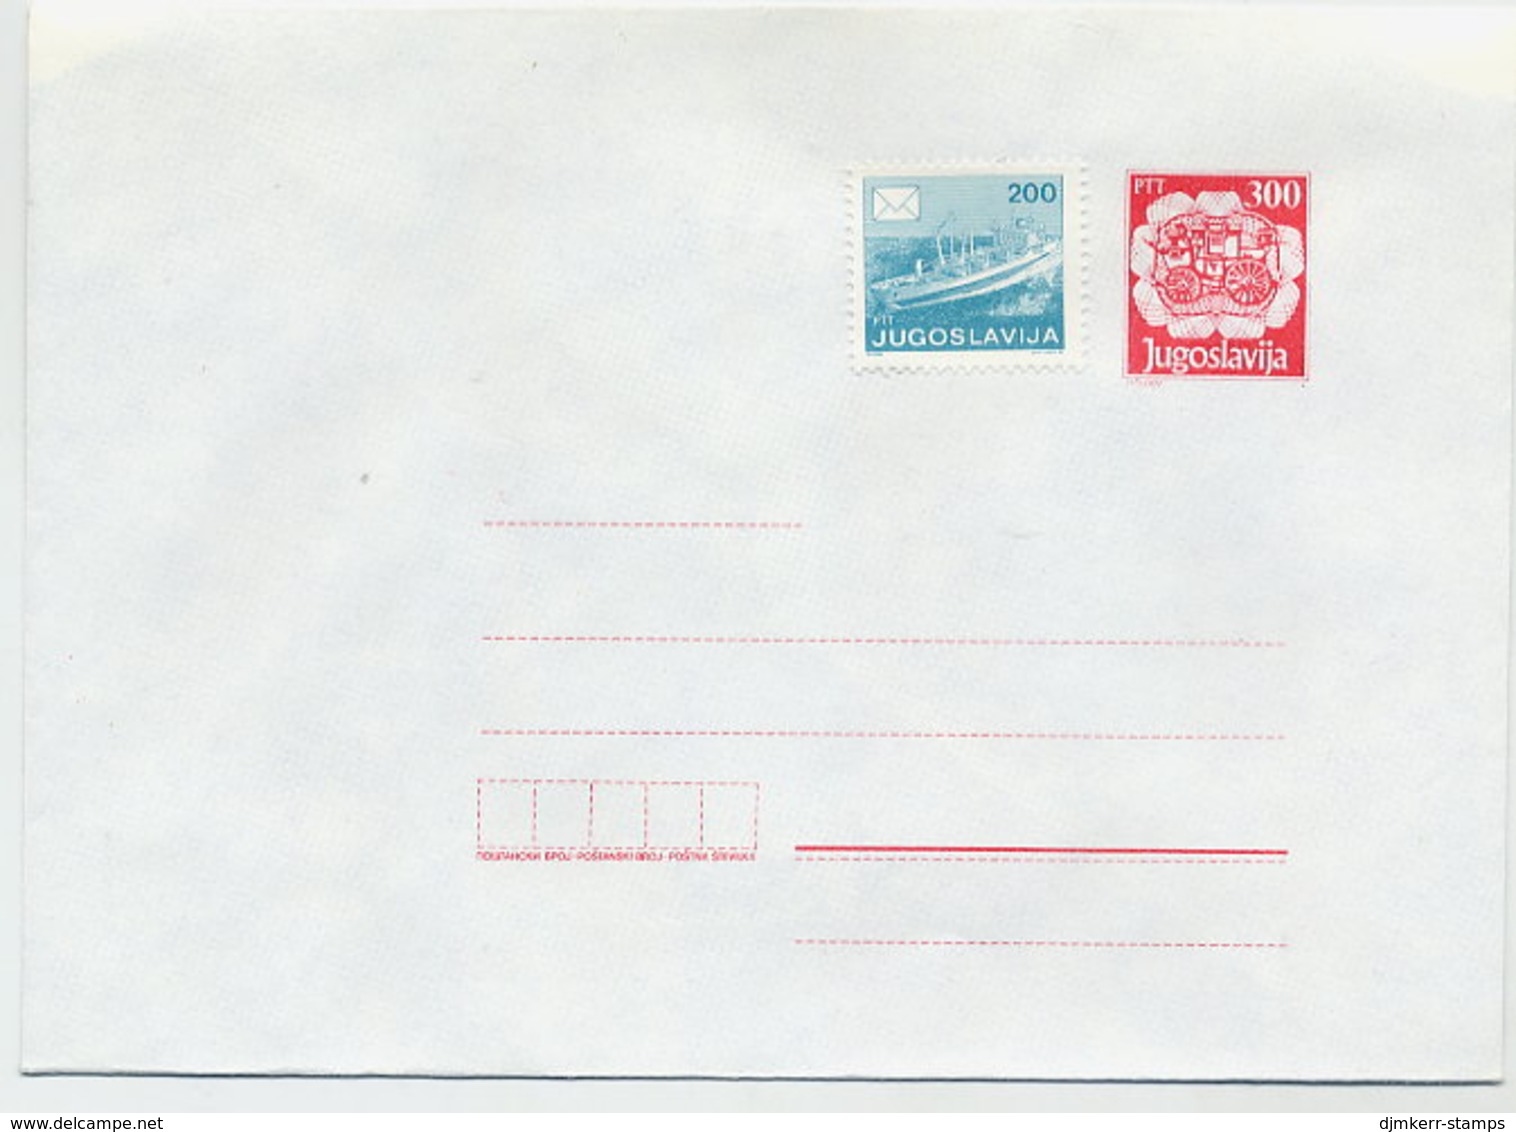 YUGOSLAVIA 1989 Postal Coach 300. D. Envelope + 200 D.stamp, Unused.  Michel U89 - Postal Stationery